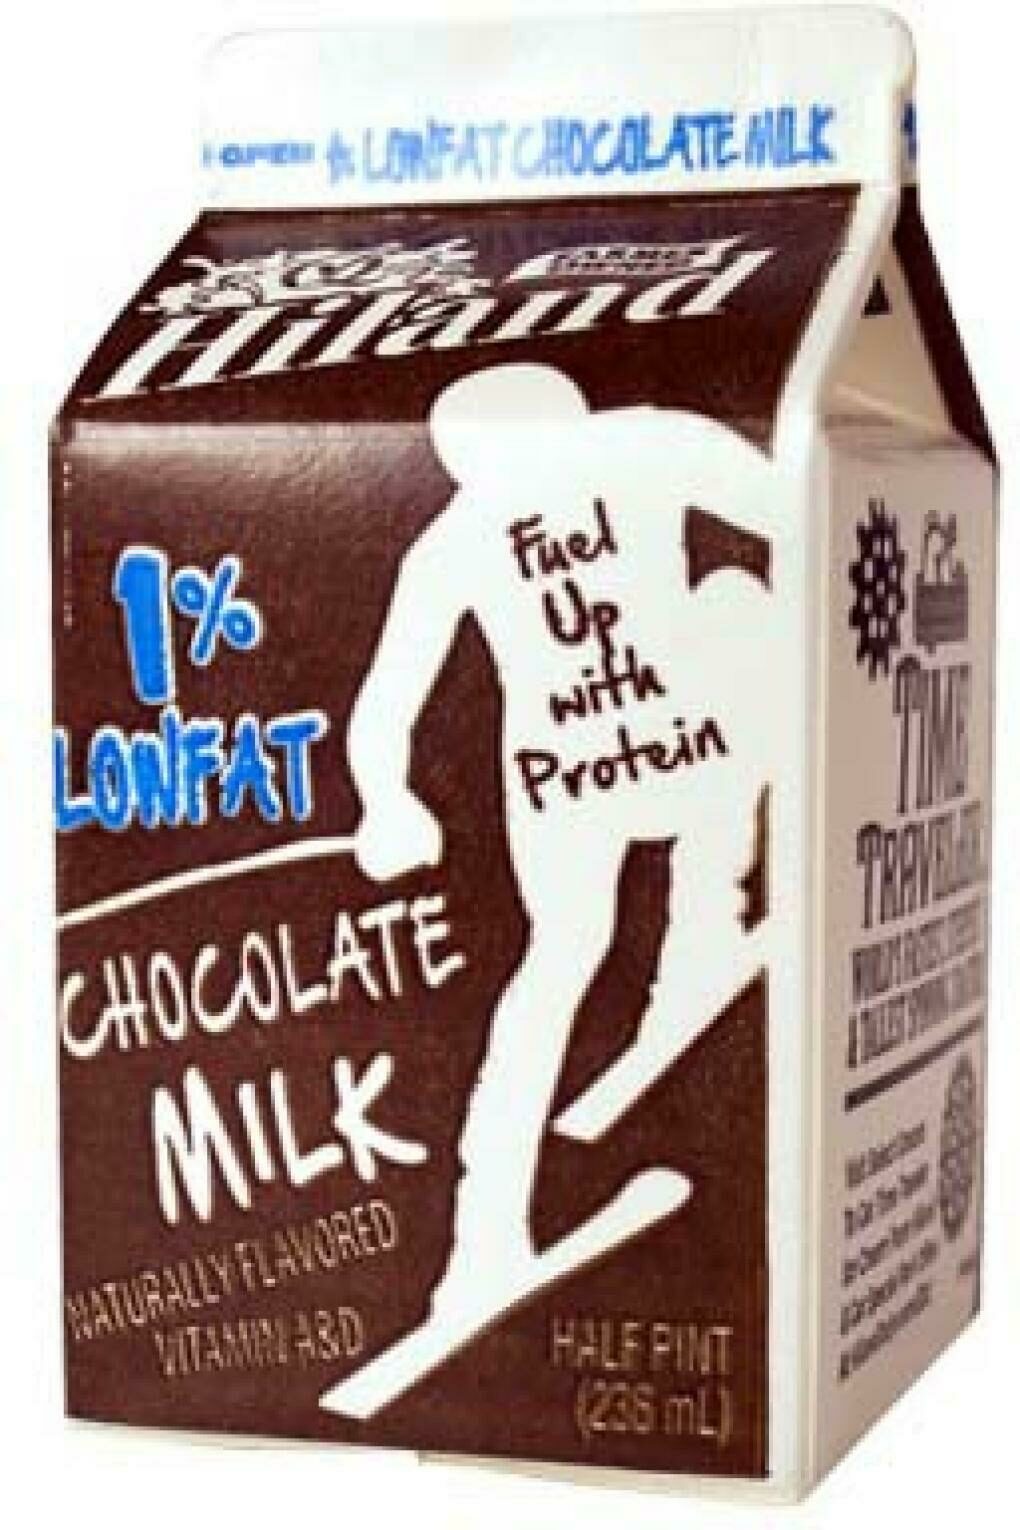 Hiland Dairy recalls low fat chocolate milk